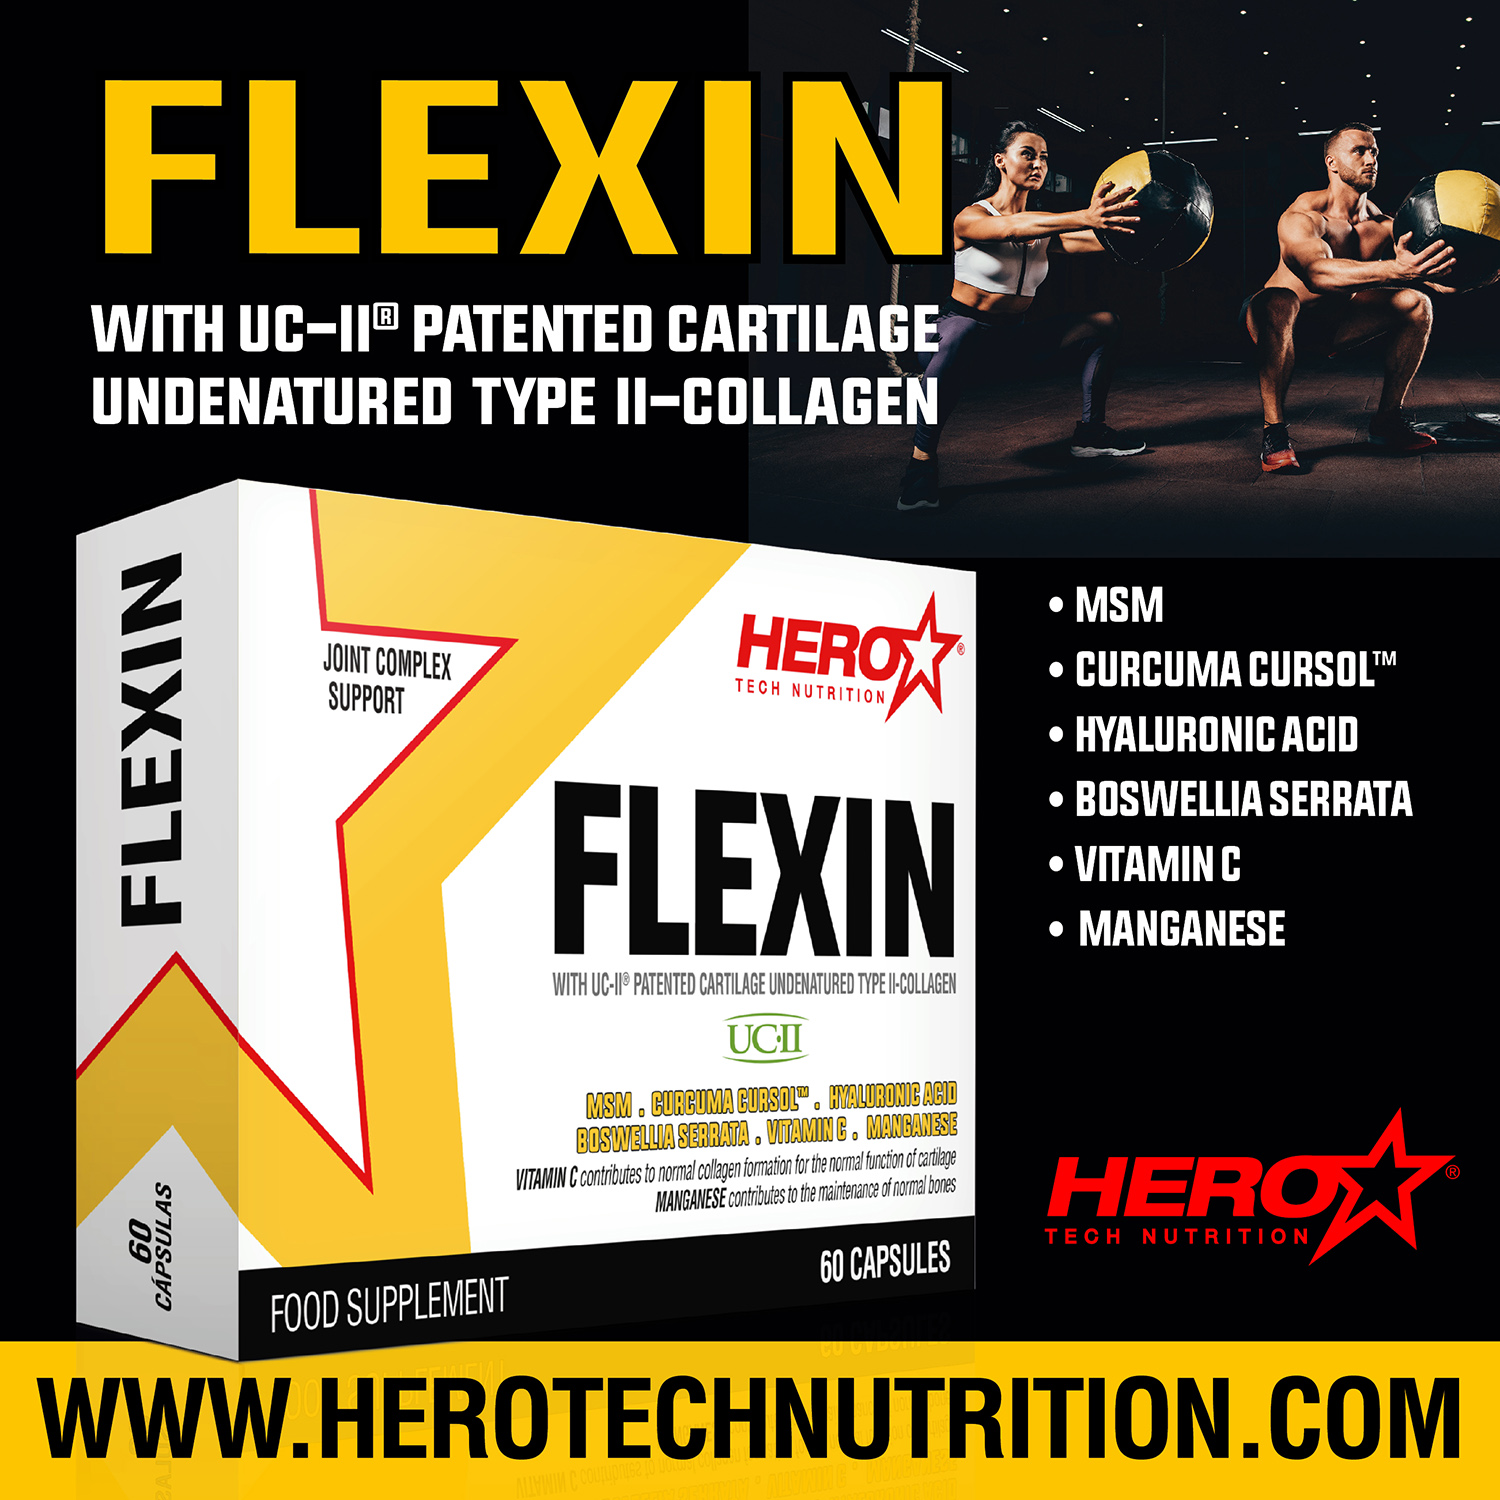 FLEXIN BONES HERO TECH NUTRITION herotechnutrition